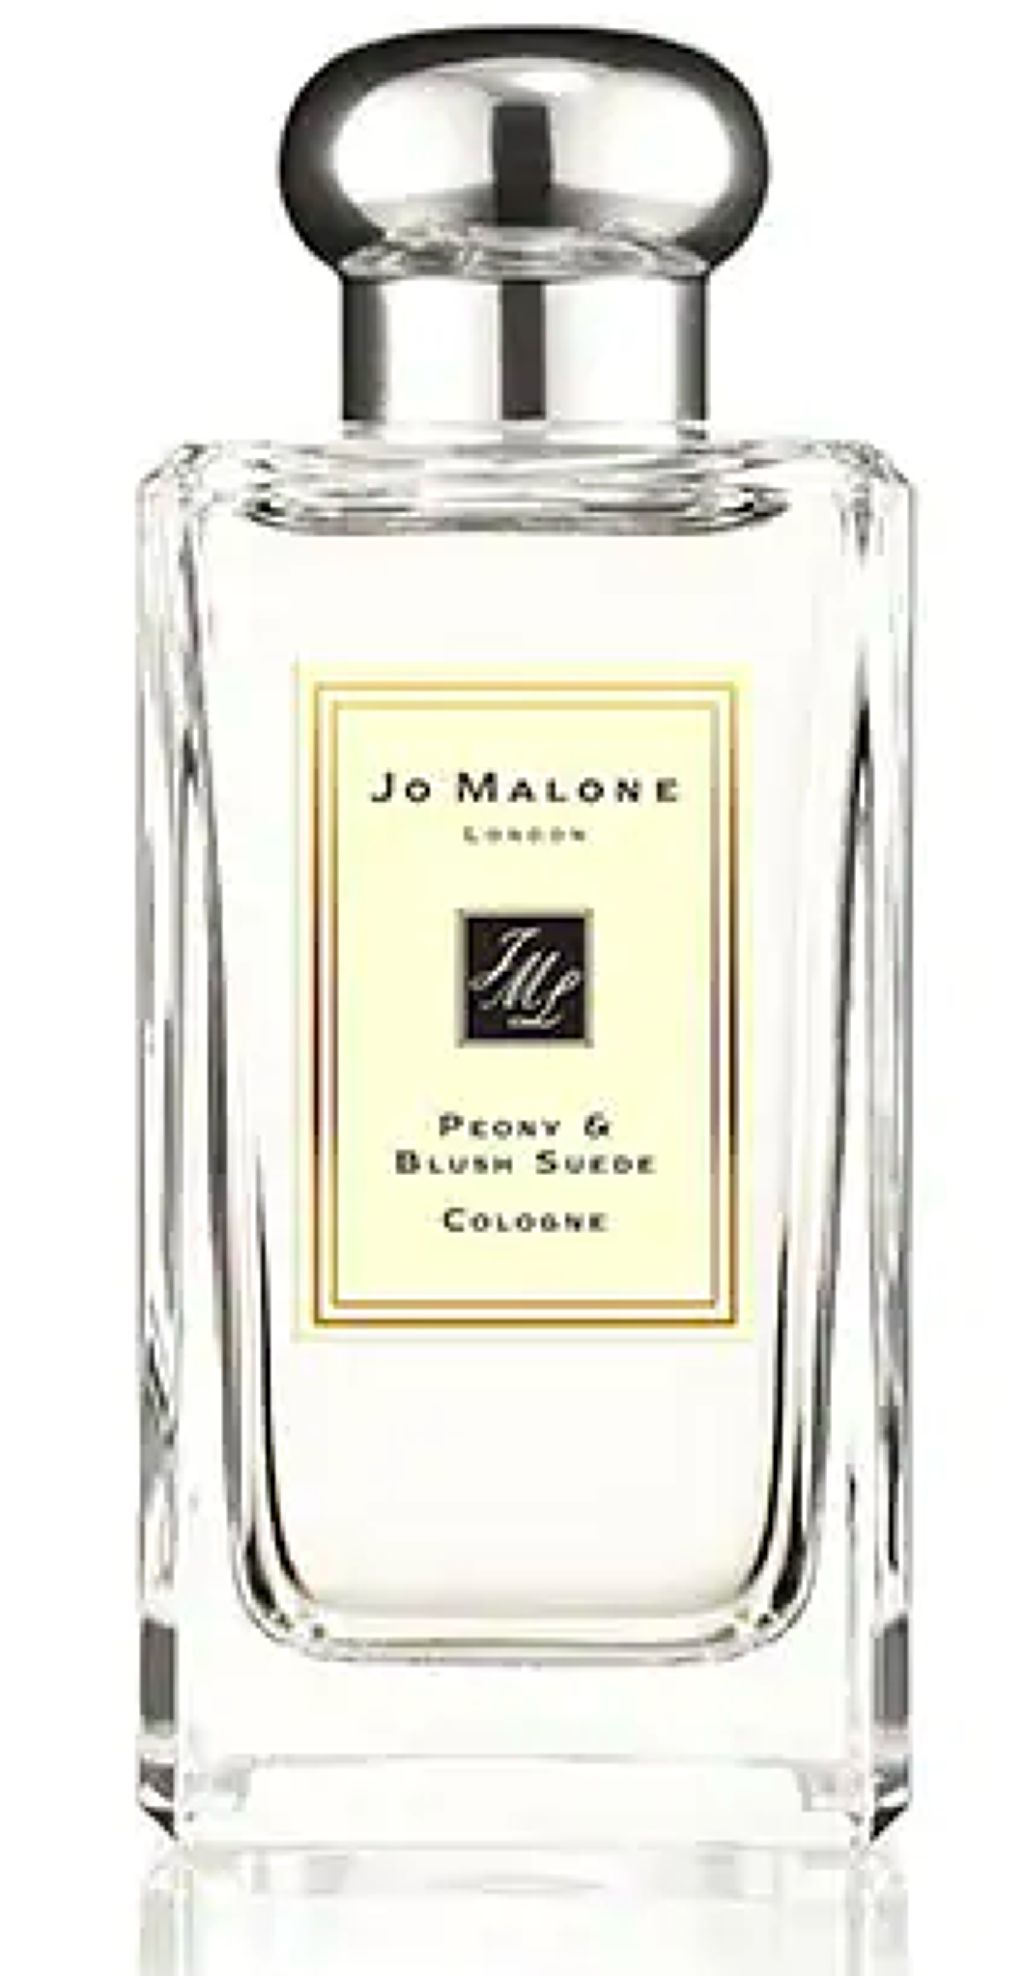 JO MALONE ピオニーブラッシュスエード コロン 9ml - 香水(女性用)